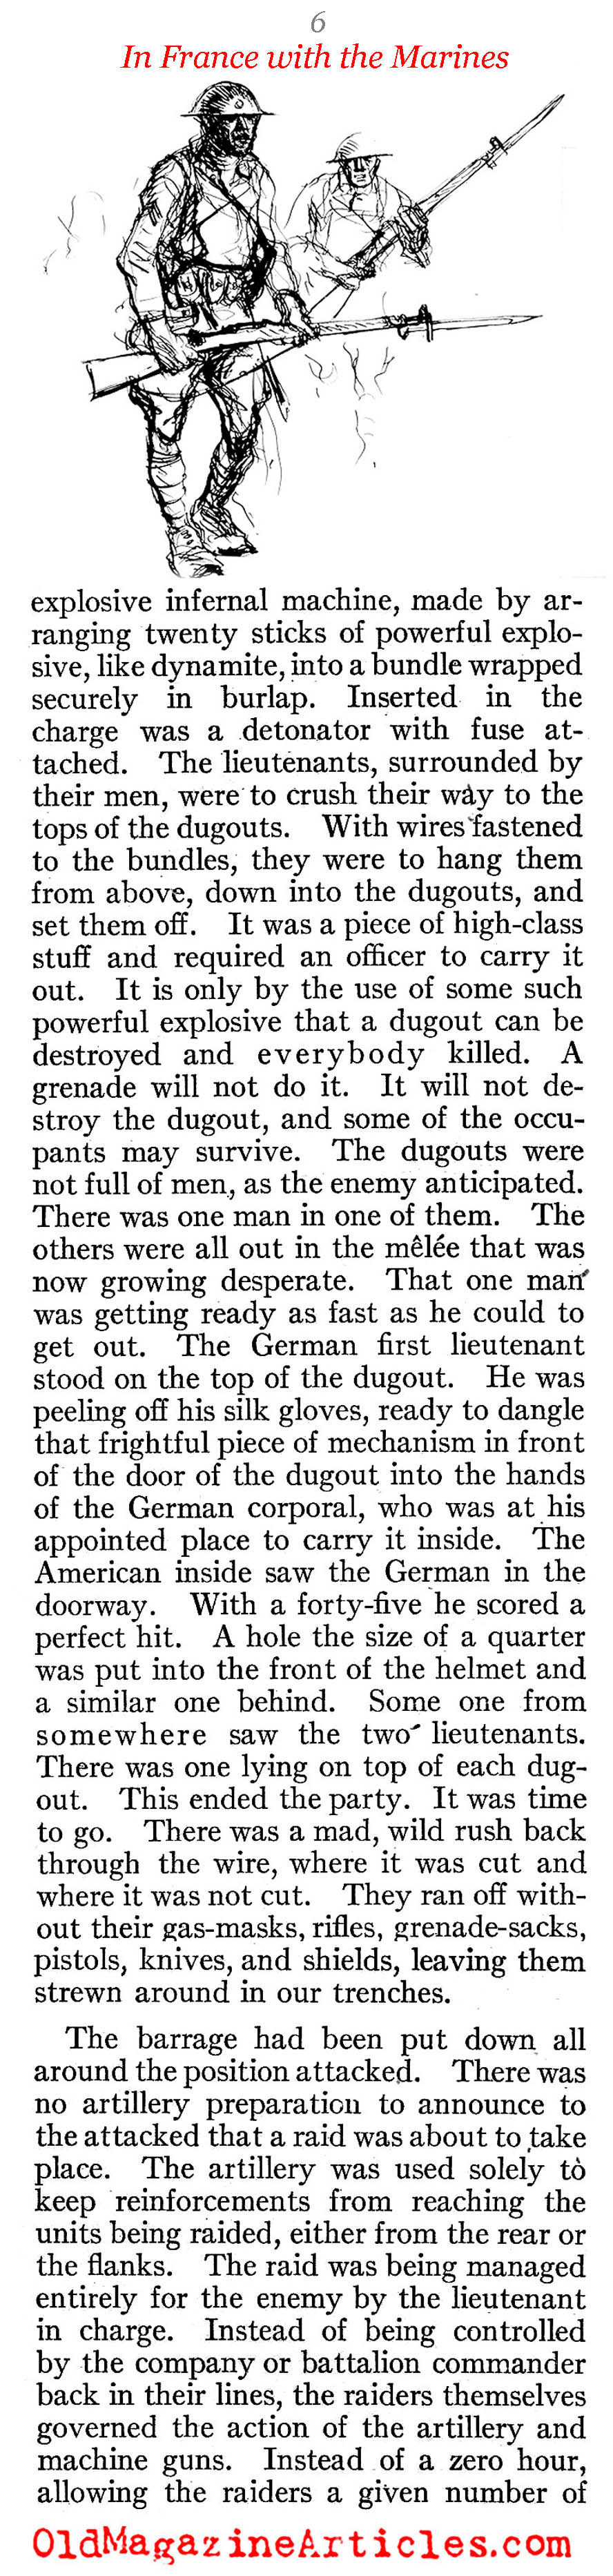 With The Marines (Scribner's Magazine, 1919)